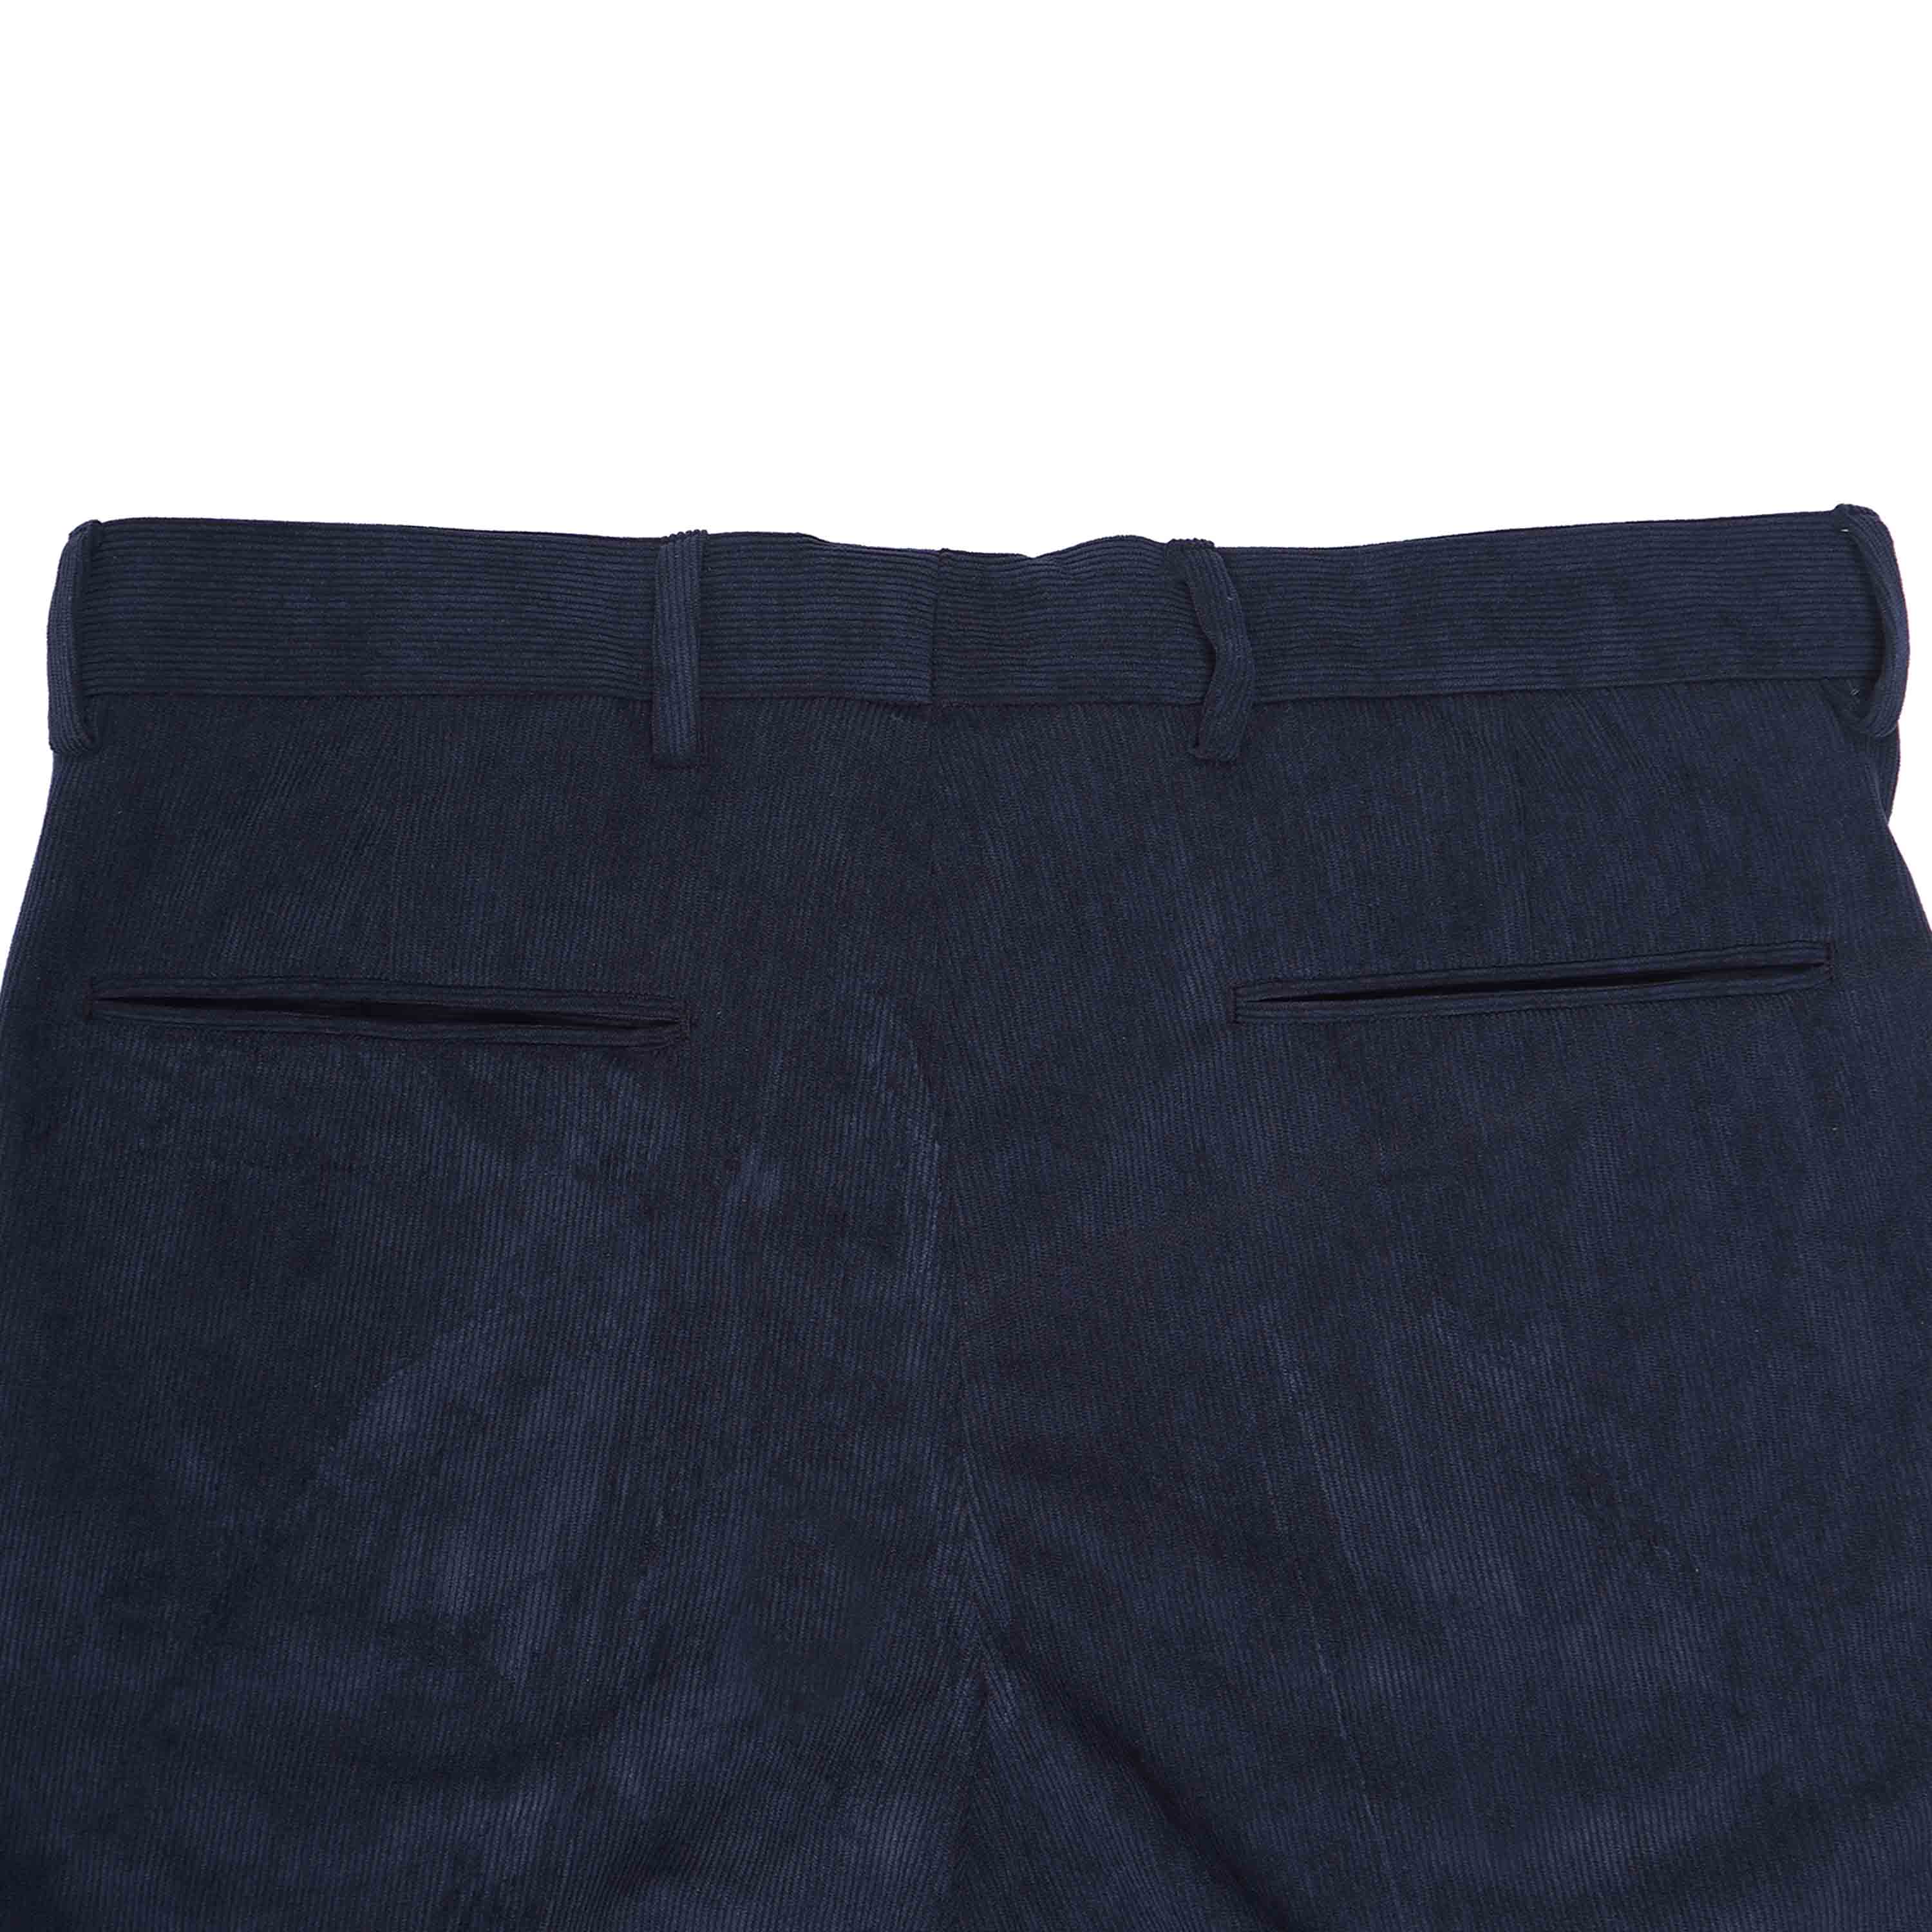 Buy Blackberrys Abto Super Slim Fit Trousers in Olive Yonk Fit online